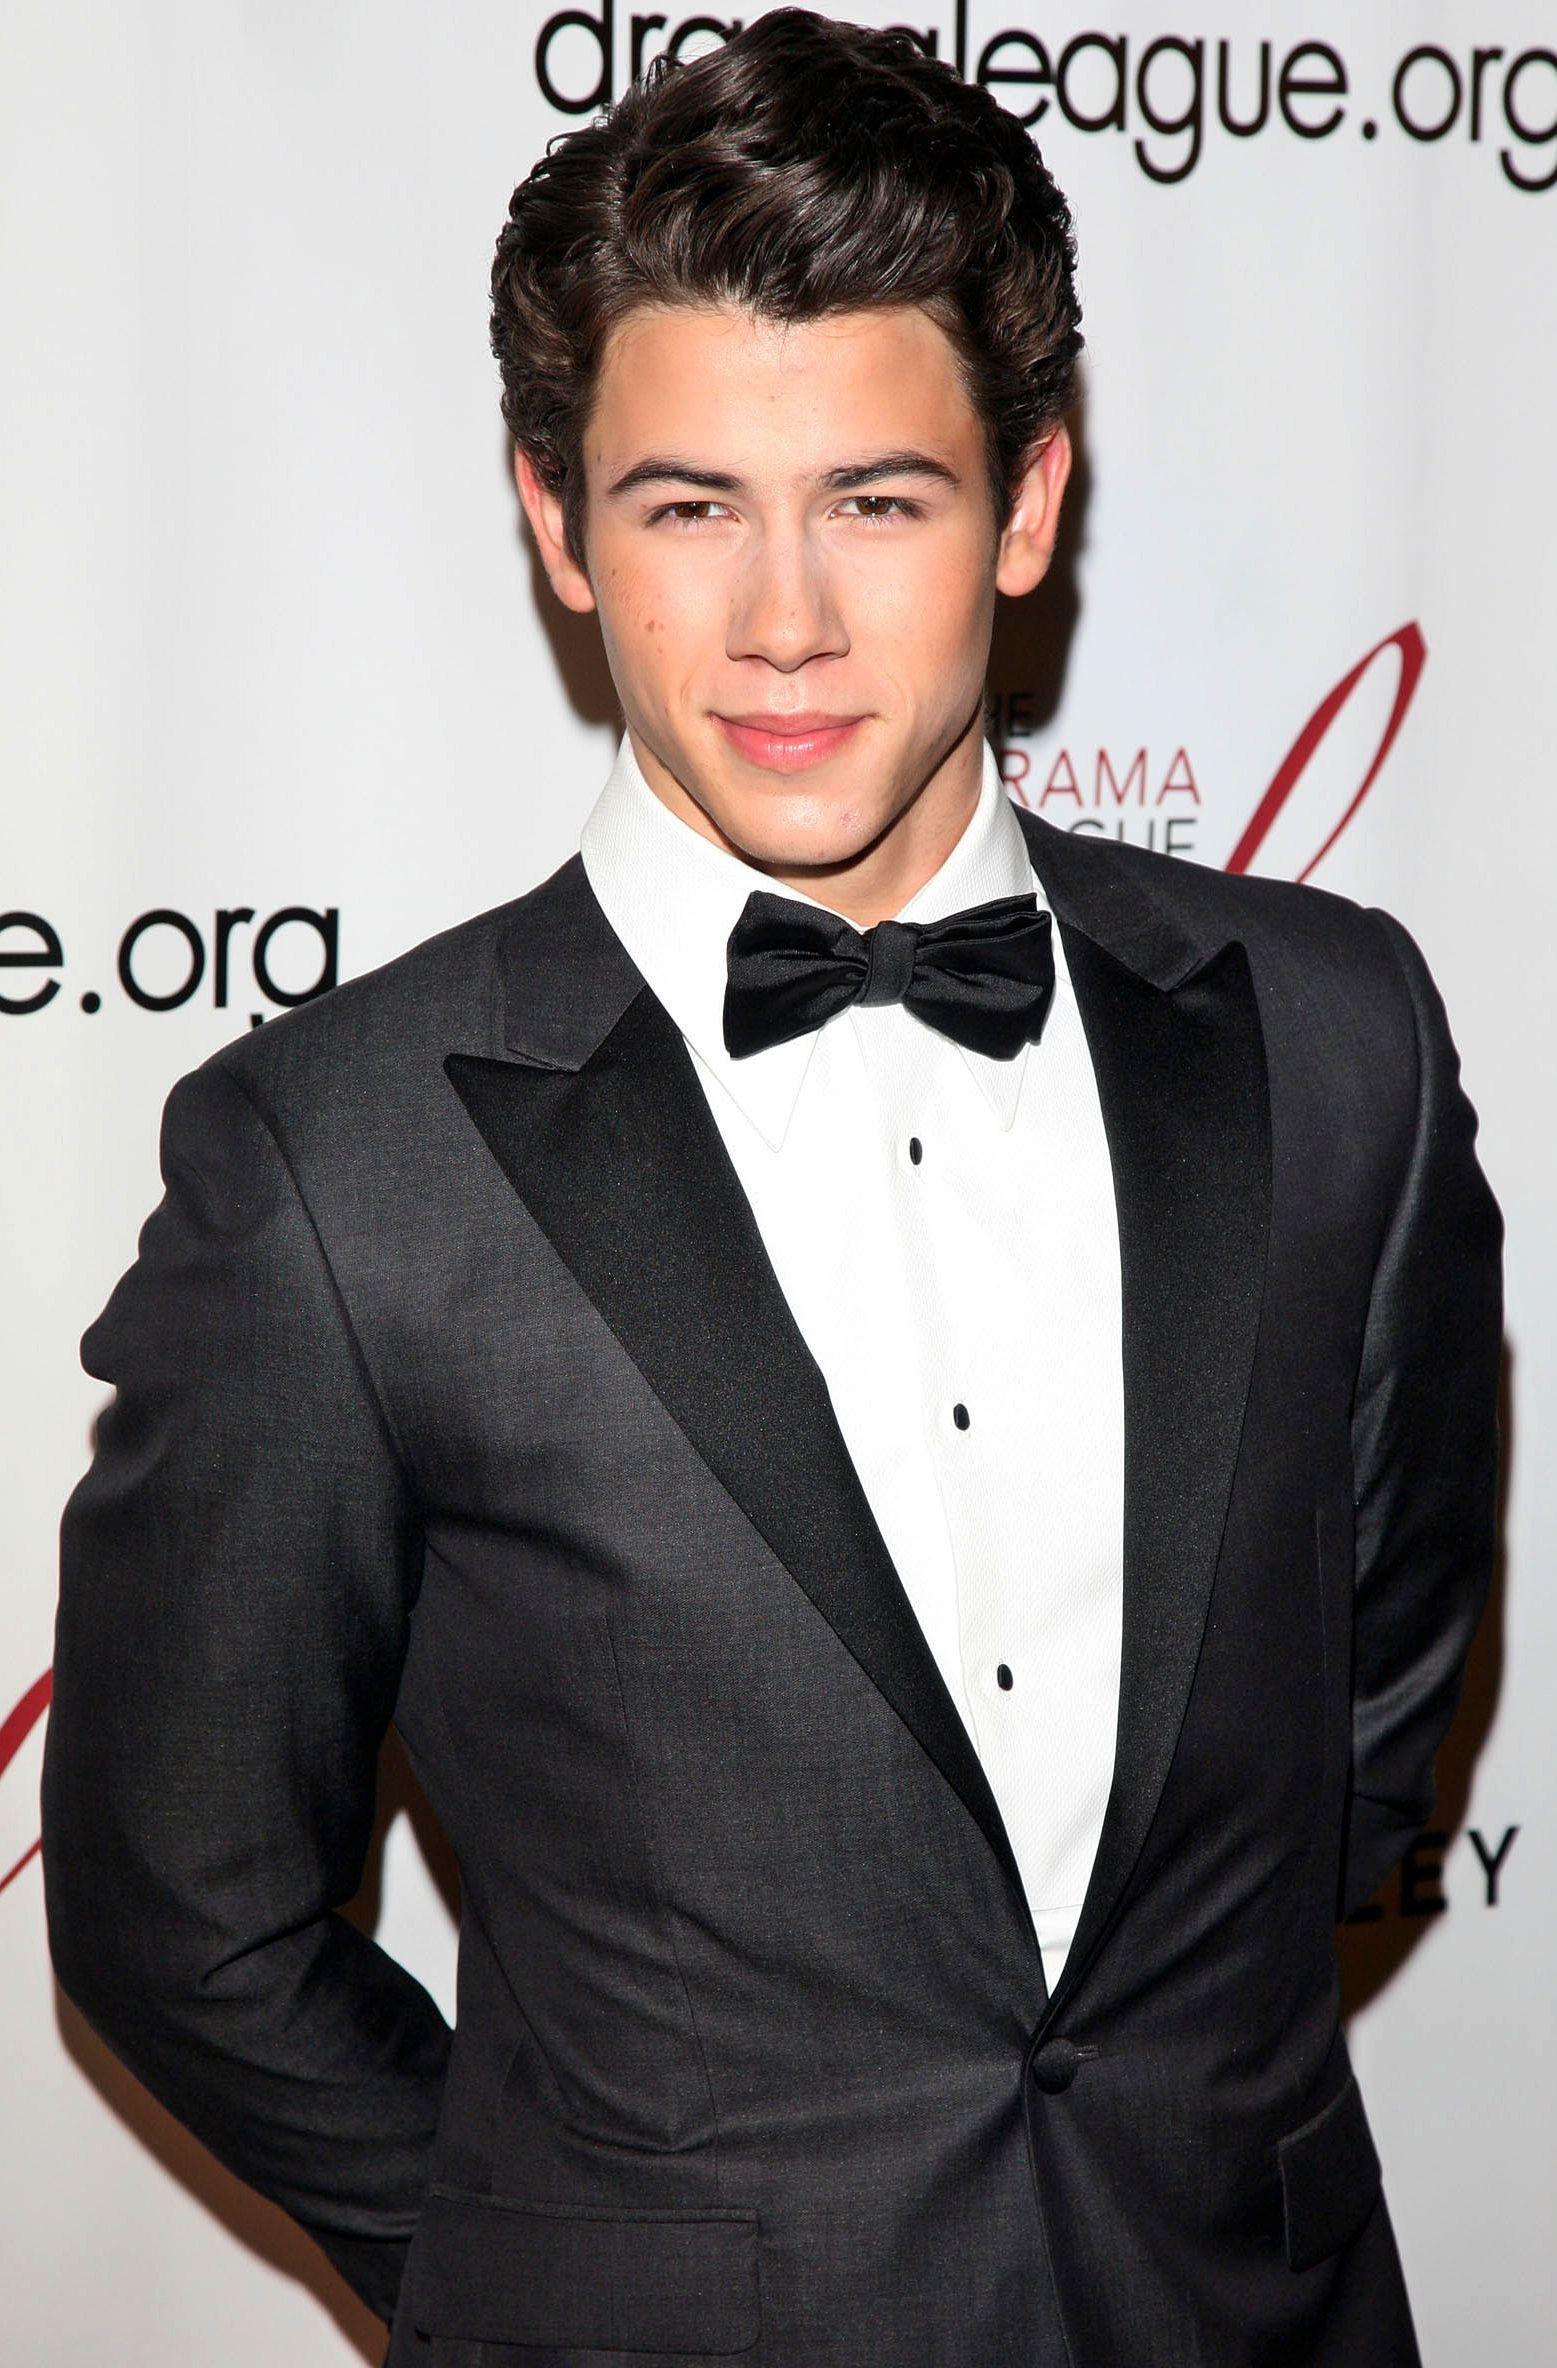 Nick Jonas Drama League Benefit Gala